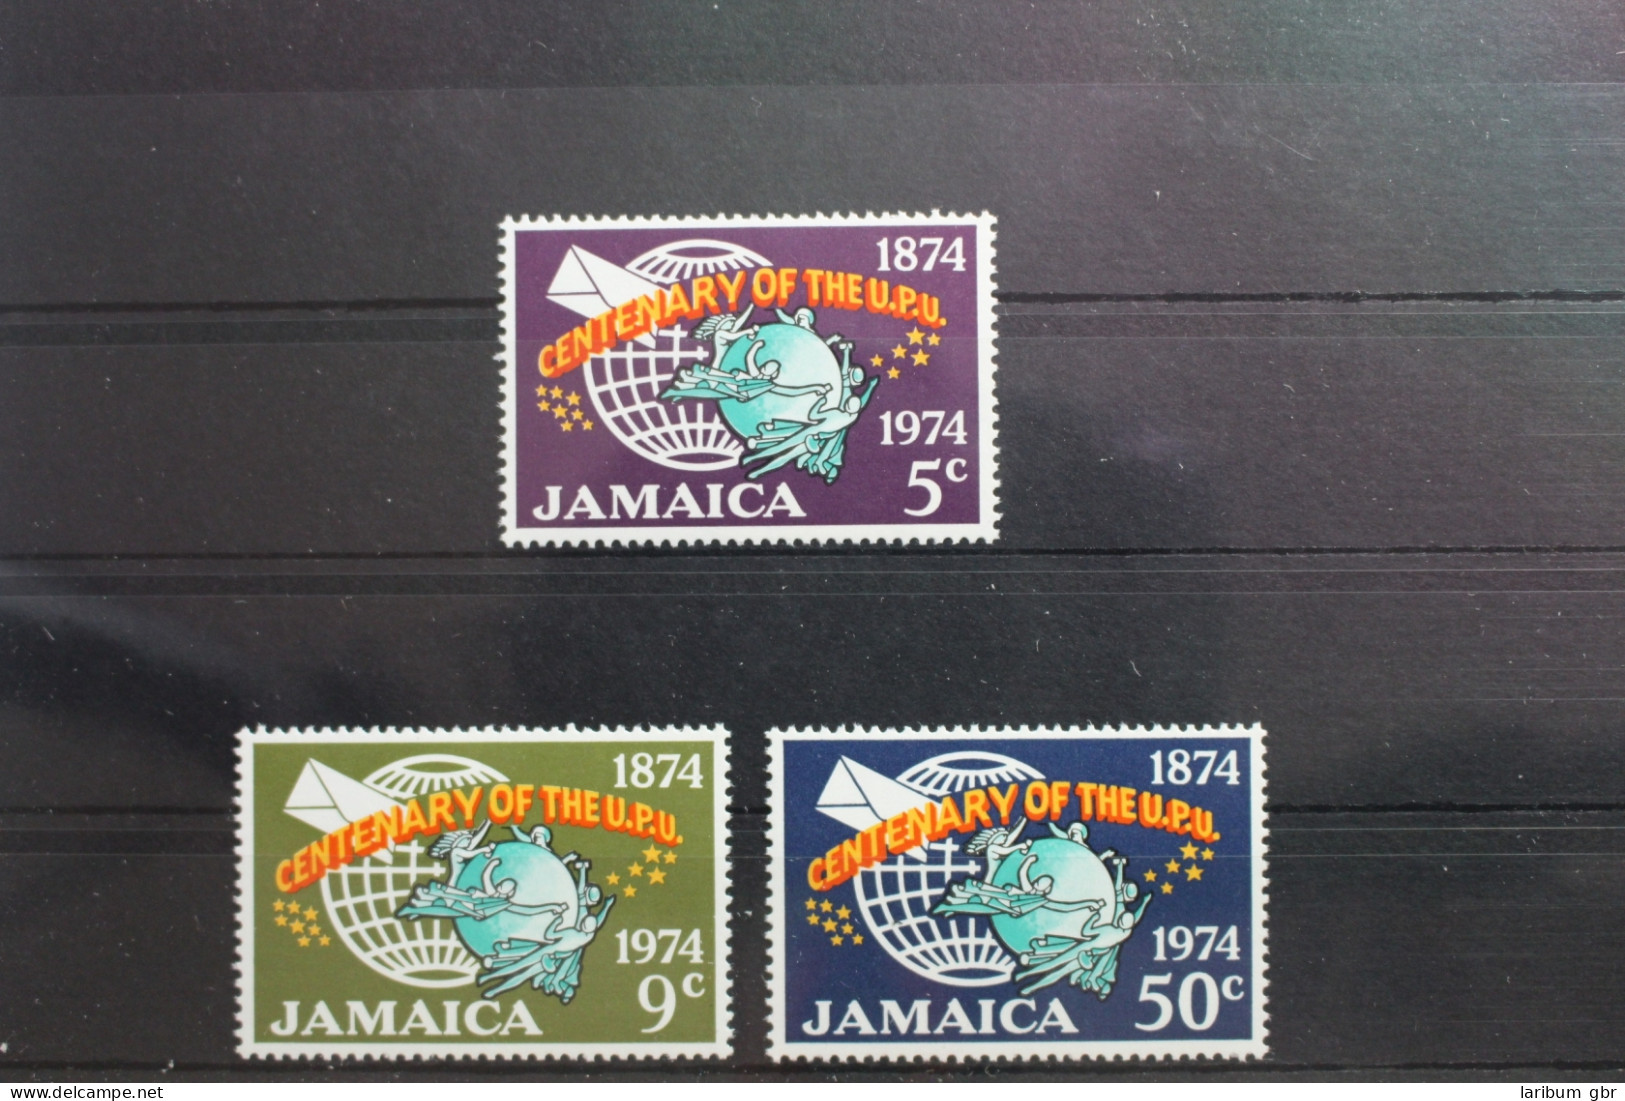 Jamaika 337-389 Postfrisch Weltpostverein UPU #SL365 - Jamaica (1962-...)